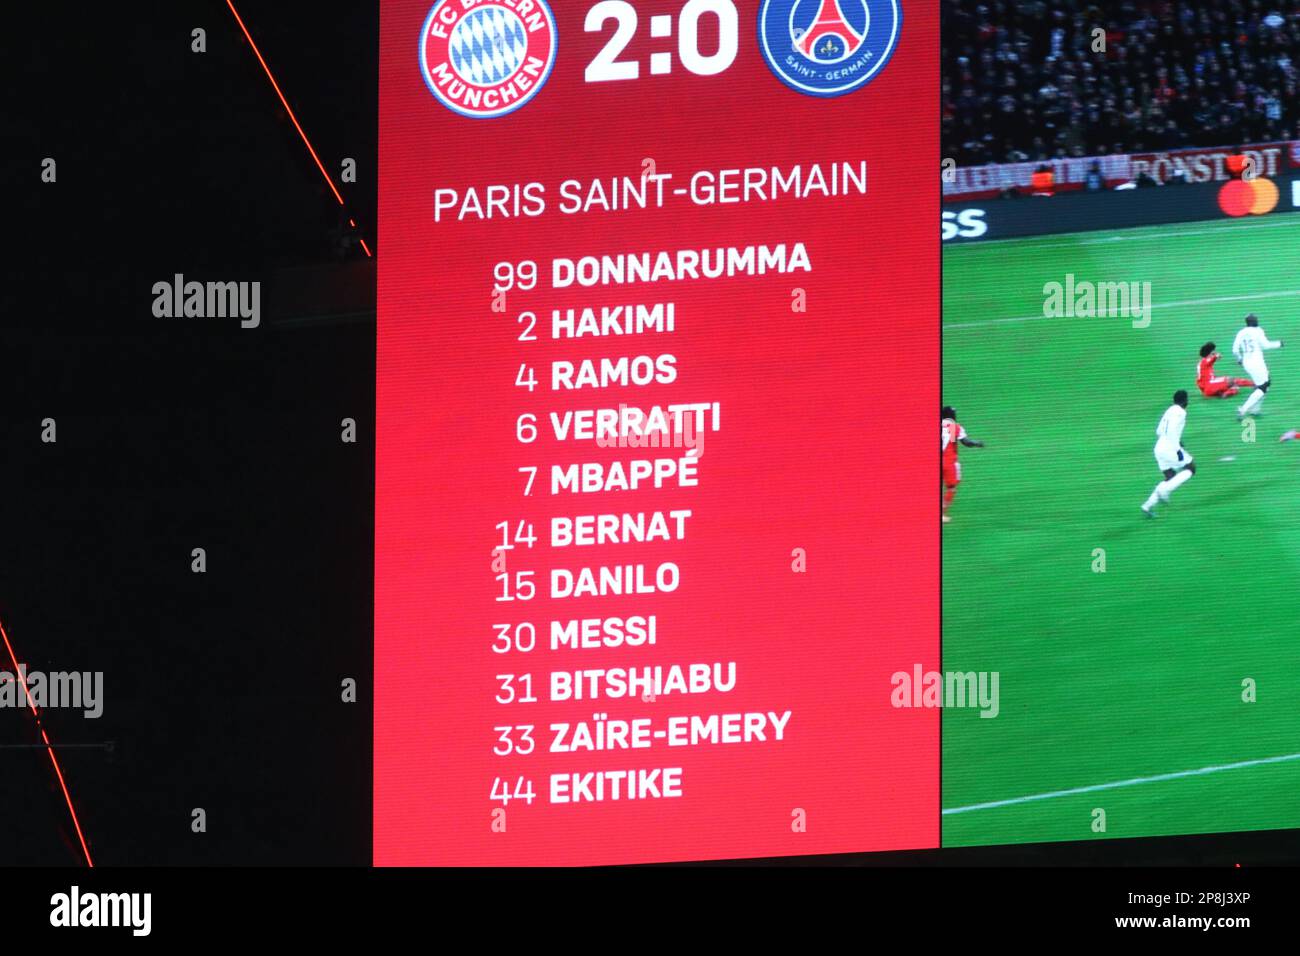 Notas dos jogadores no FIFA 16 - Paris Saint-Germain